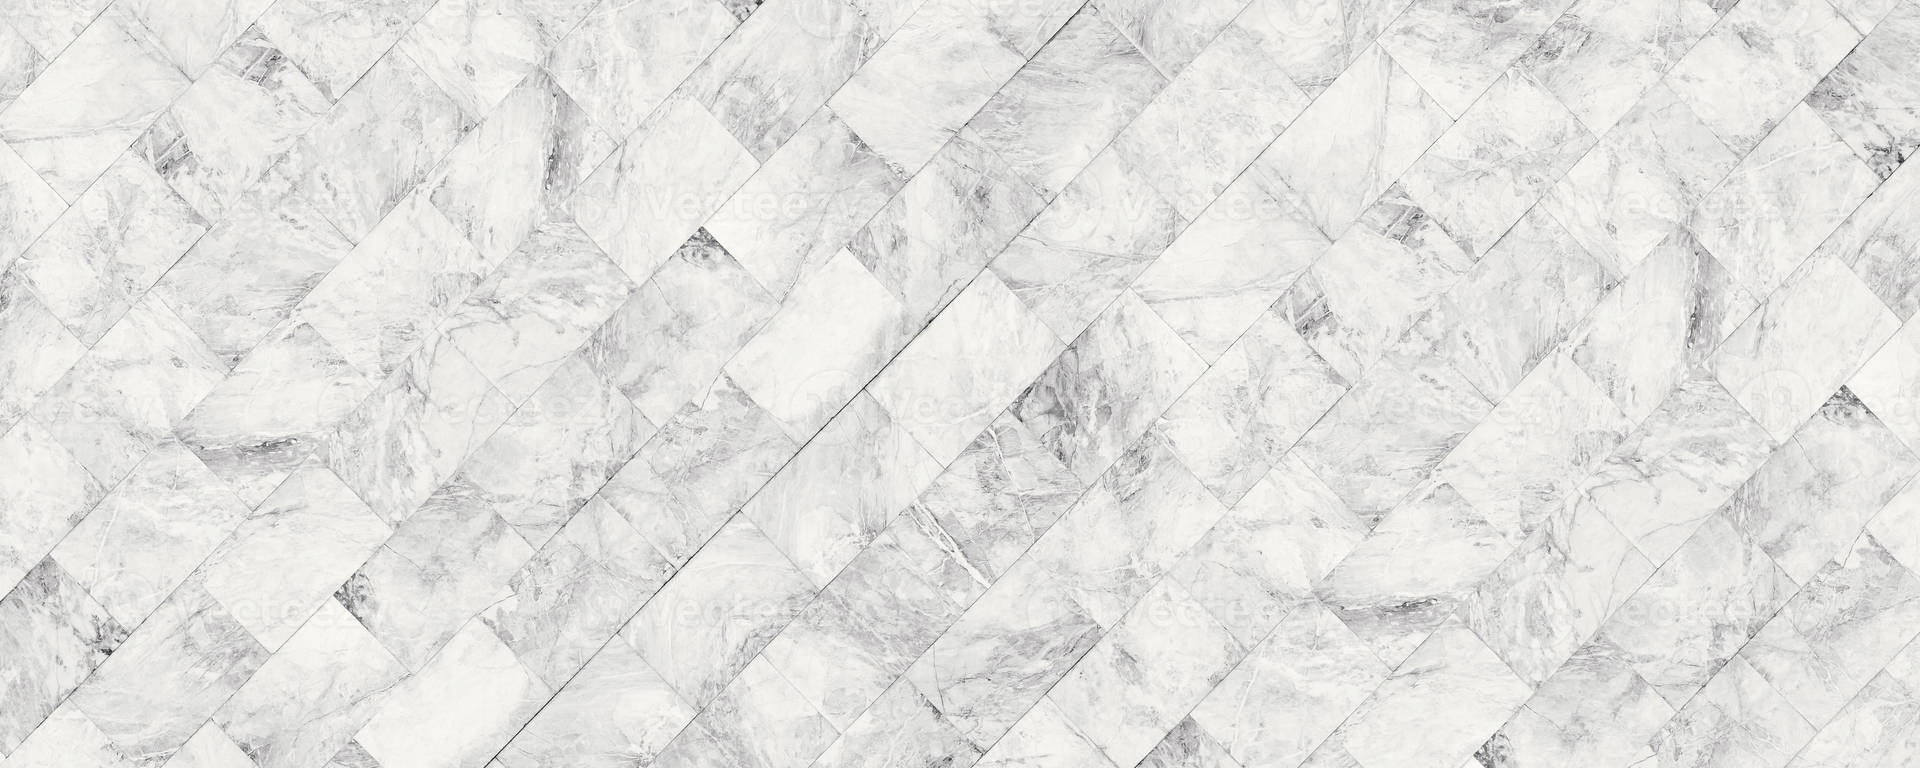 Caption: Elegant Classic Marble Floor Tiles Wallpaper